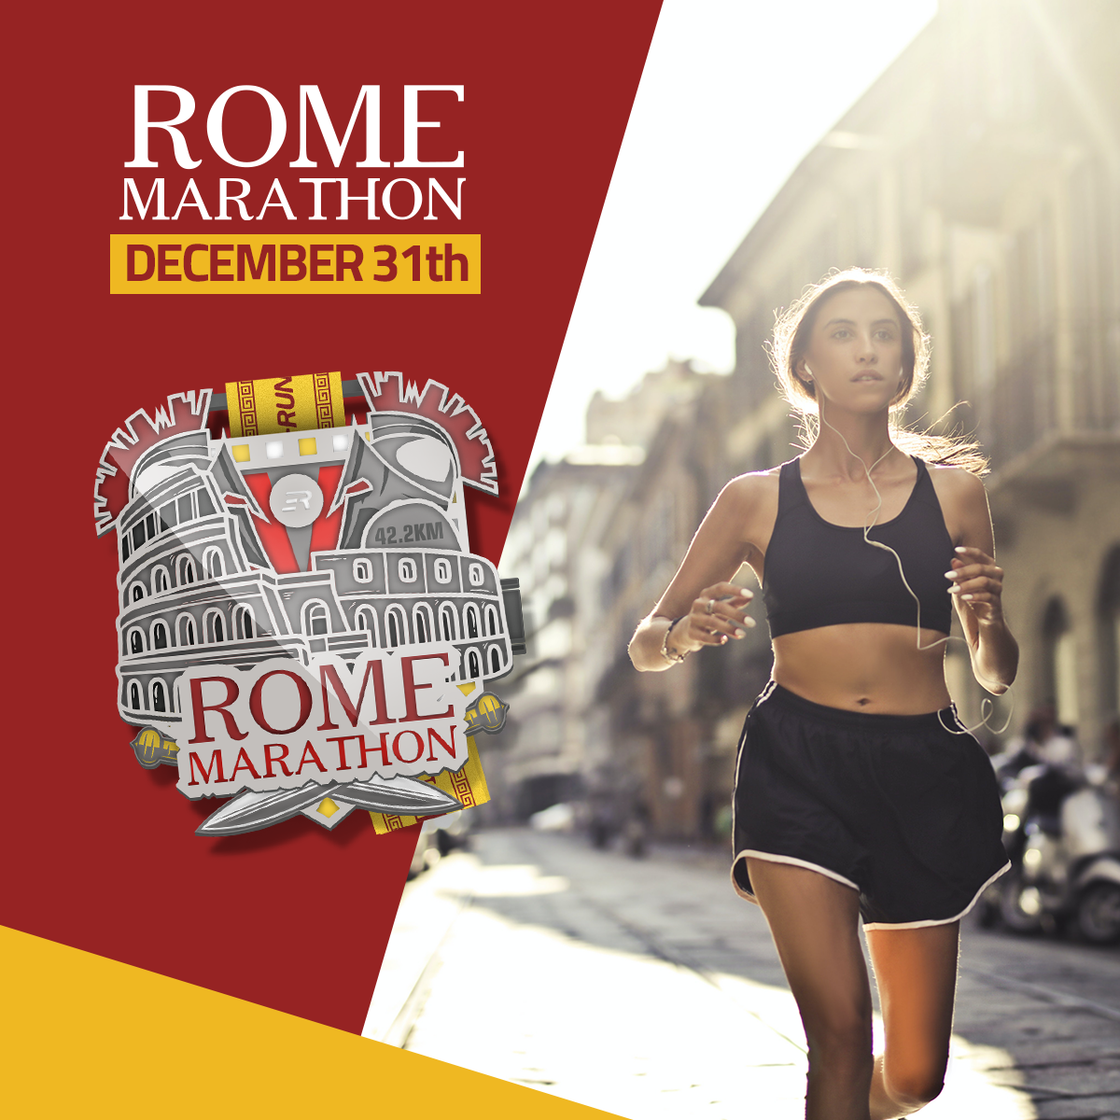 ROME Marathon | The last race of the Year | December 31st